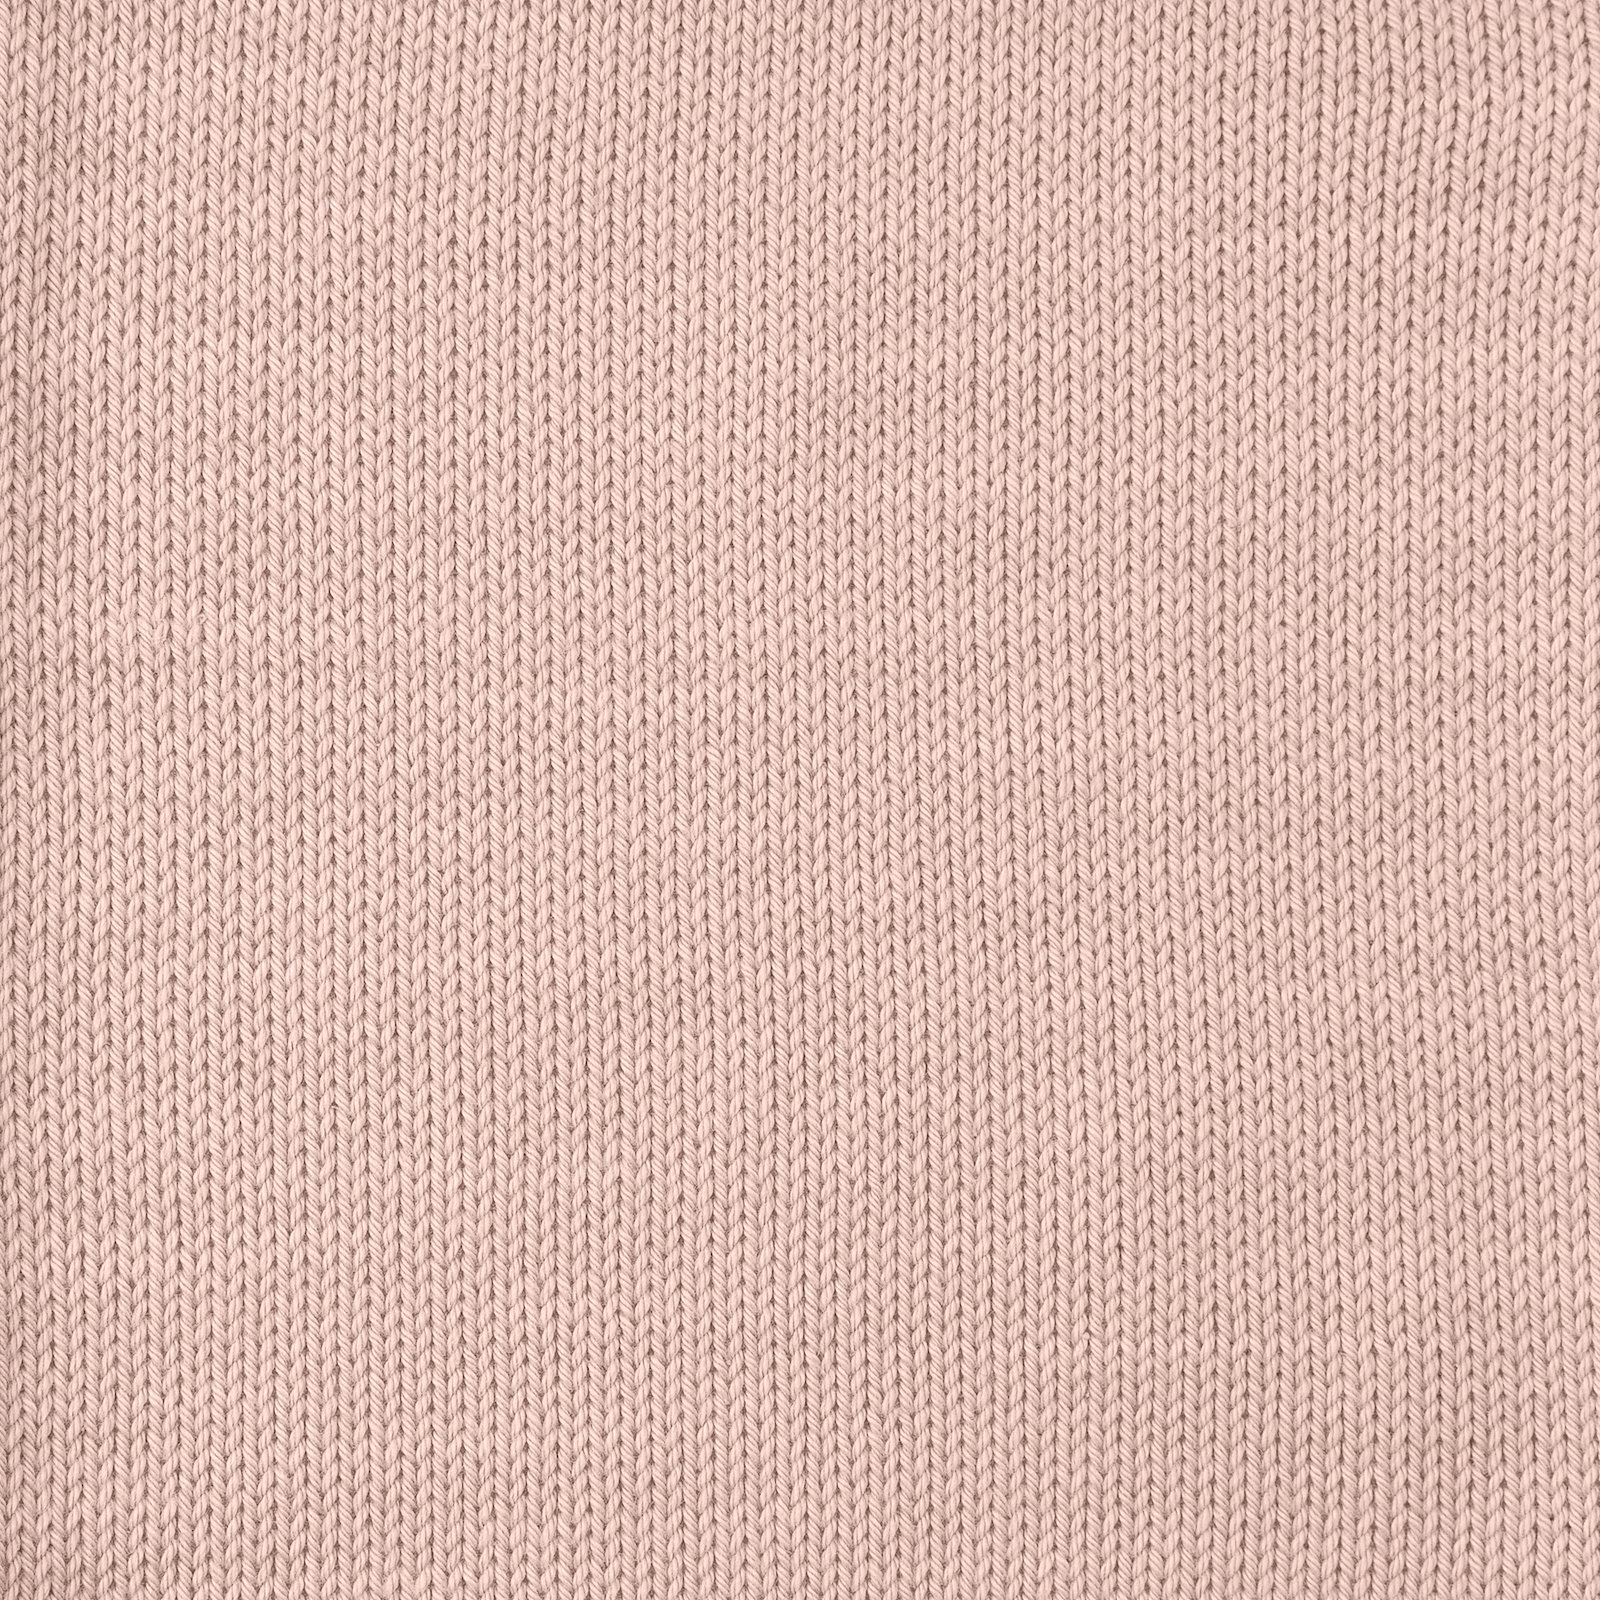 FRAYA, 100% cotton 8/4  yarn  "Colourful", dusty rose 90060089_sskit